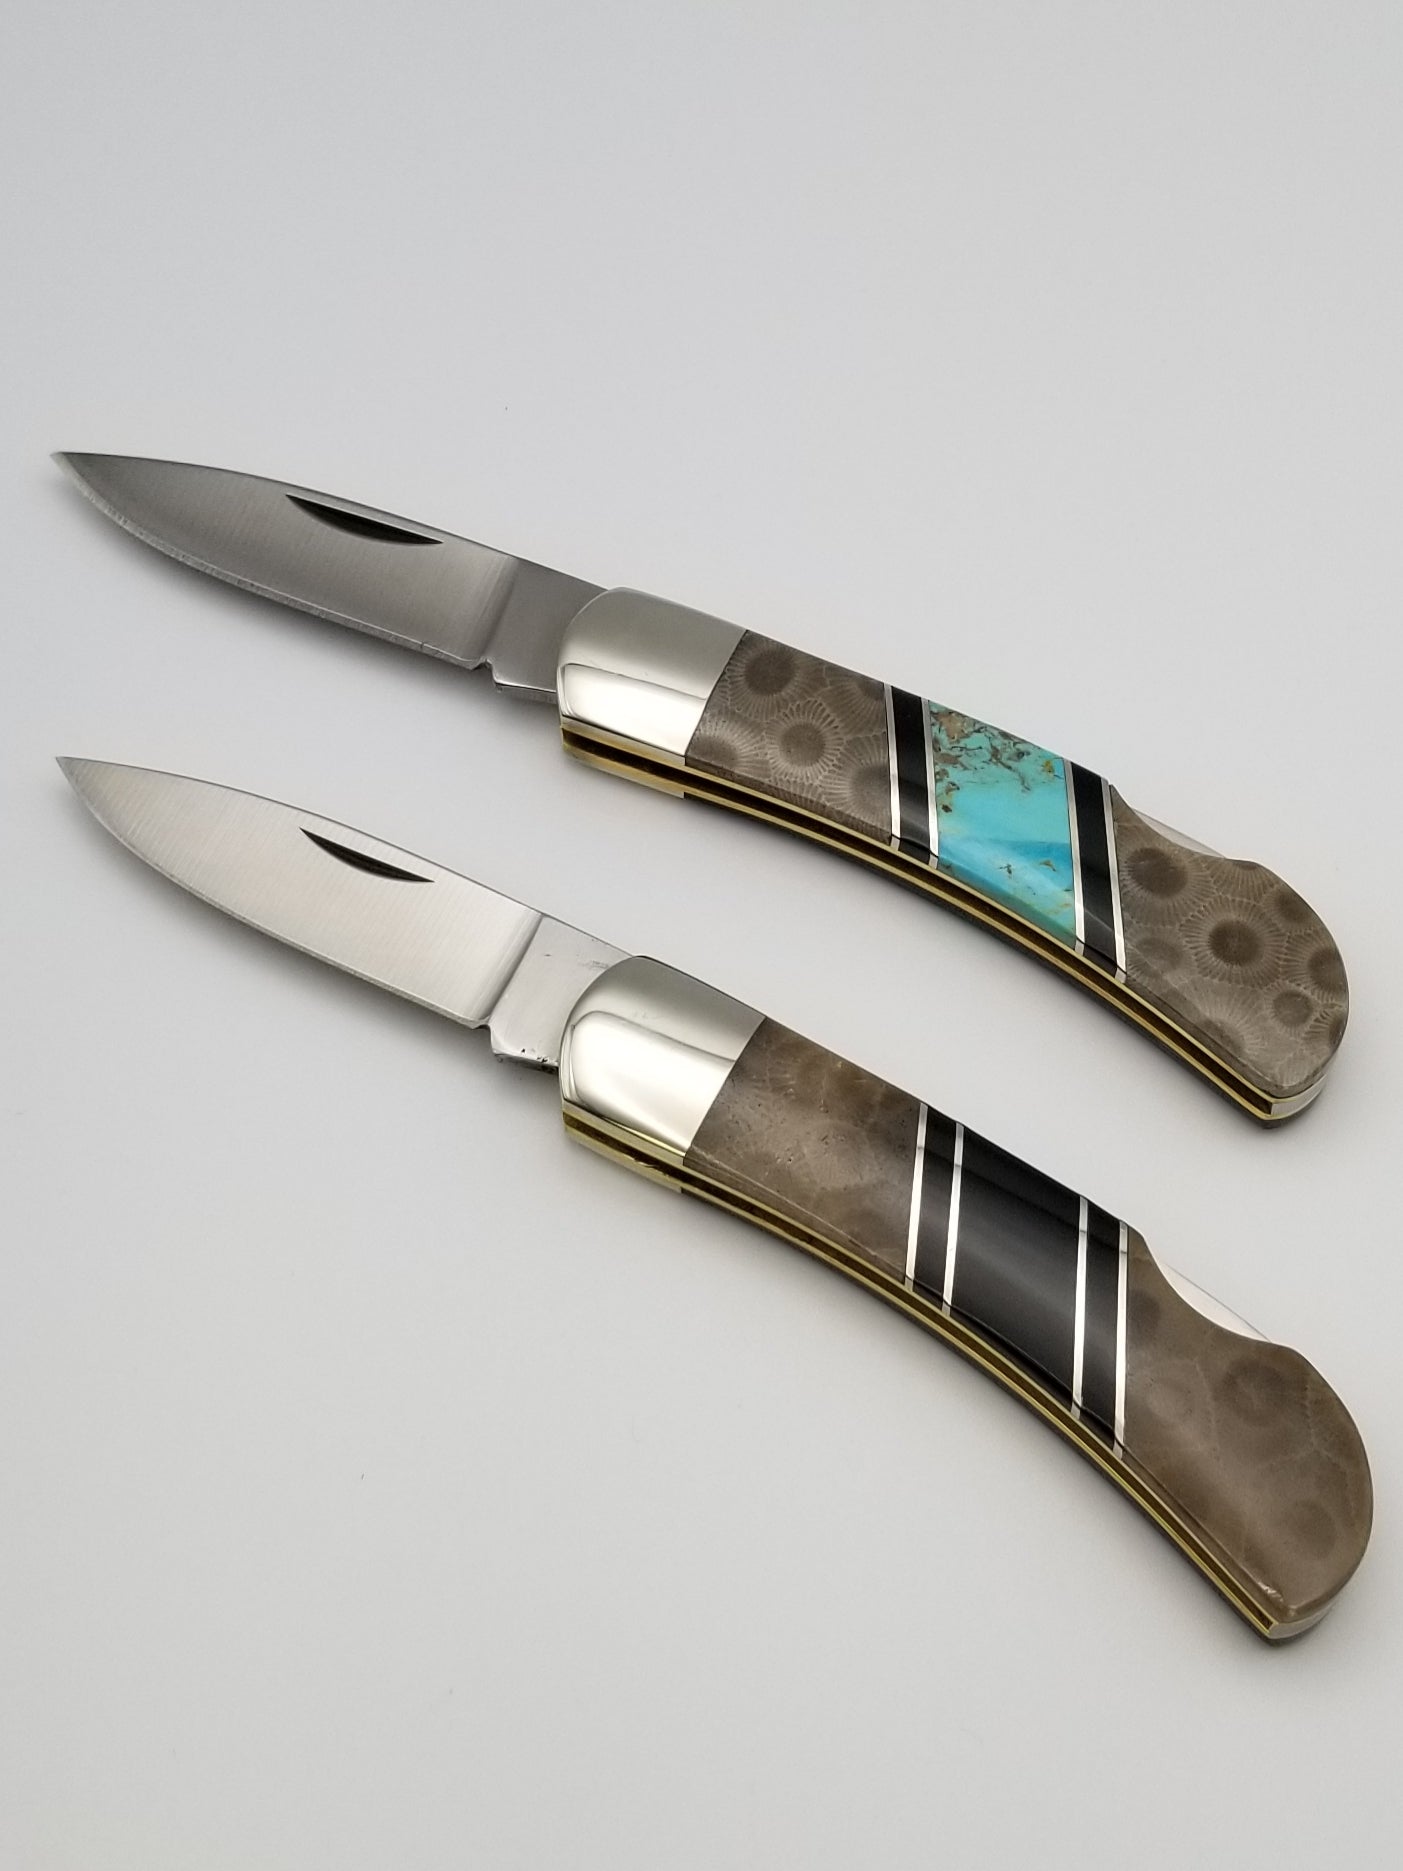 Petoskey Stone Pocket Knife With Inlay